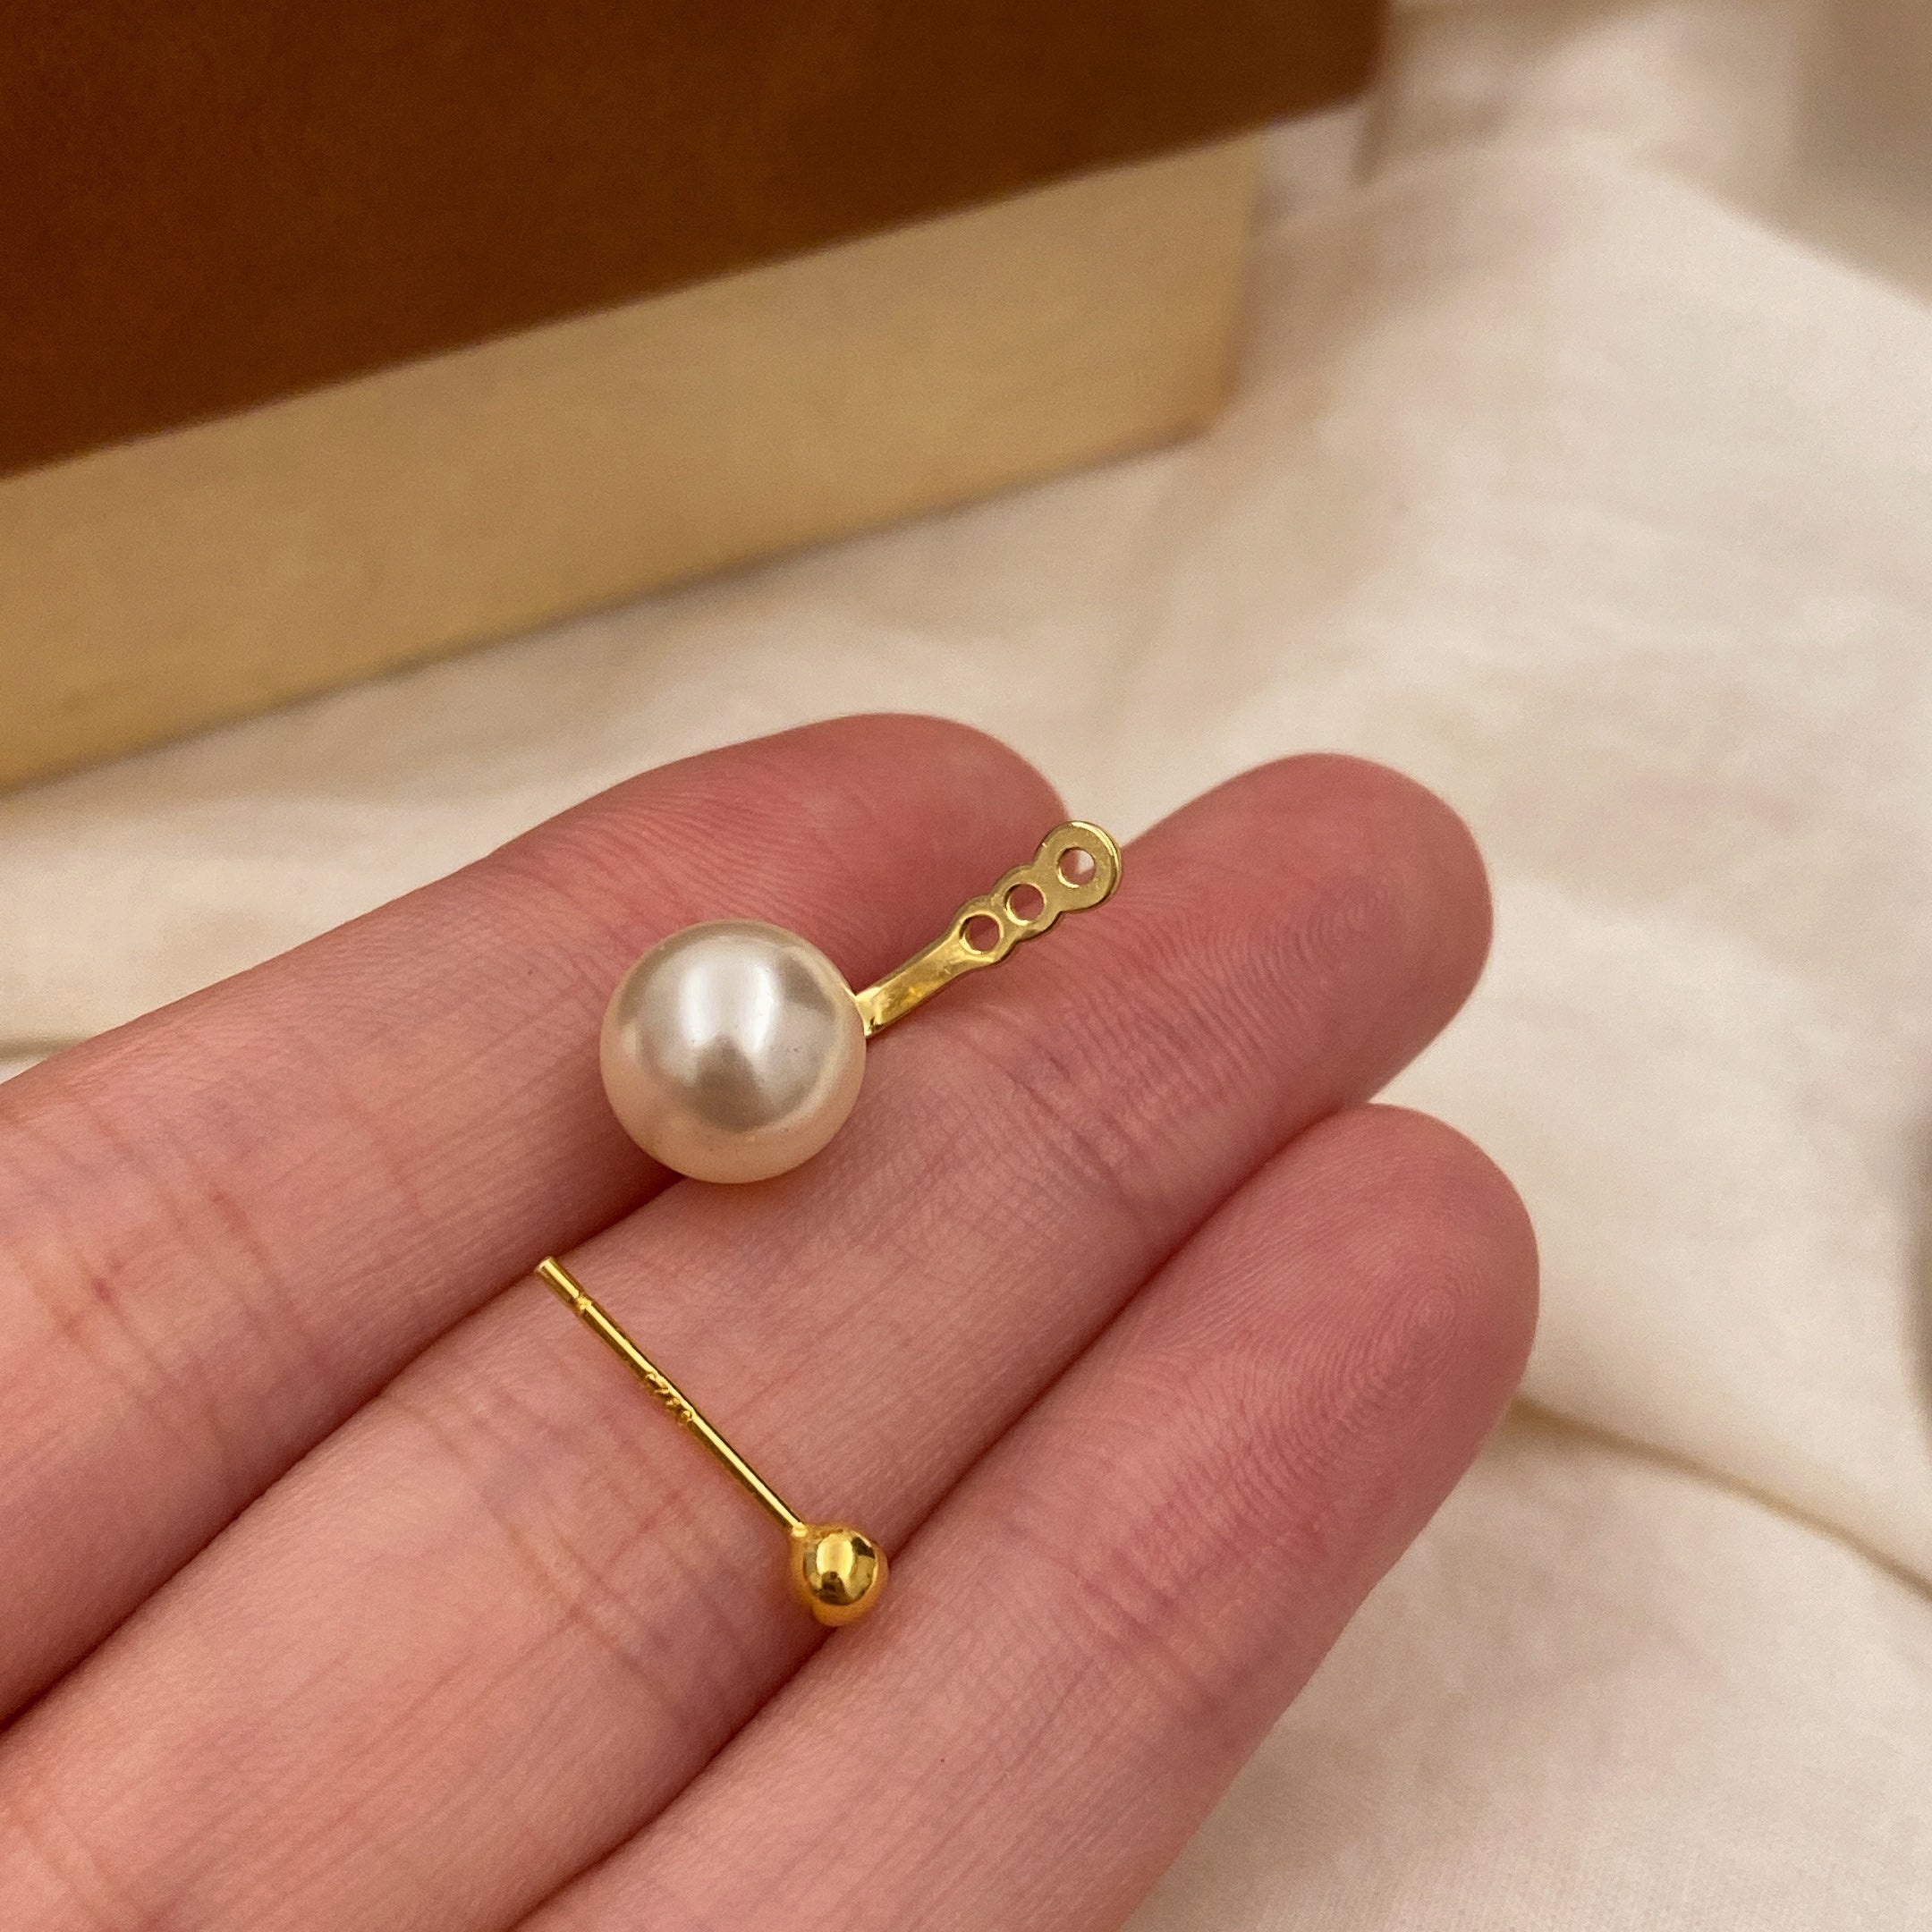 Pearl Sterling Silver Gold-Plated Handmade Earrings